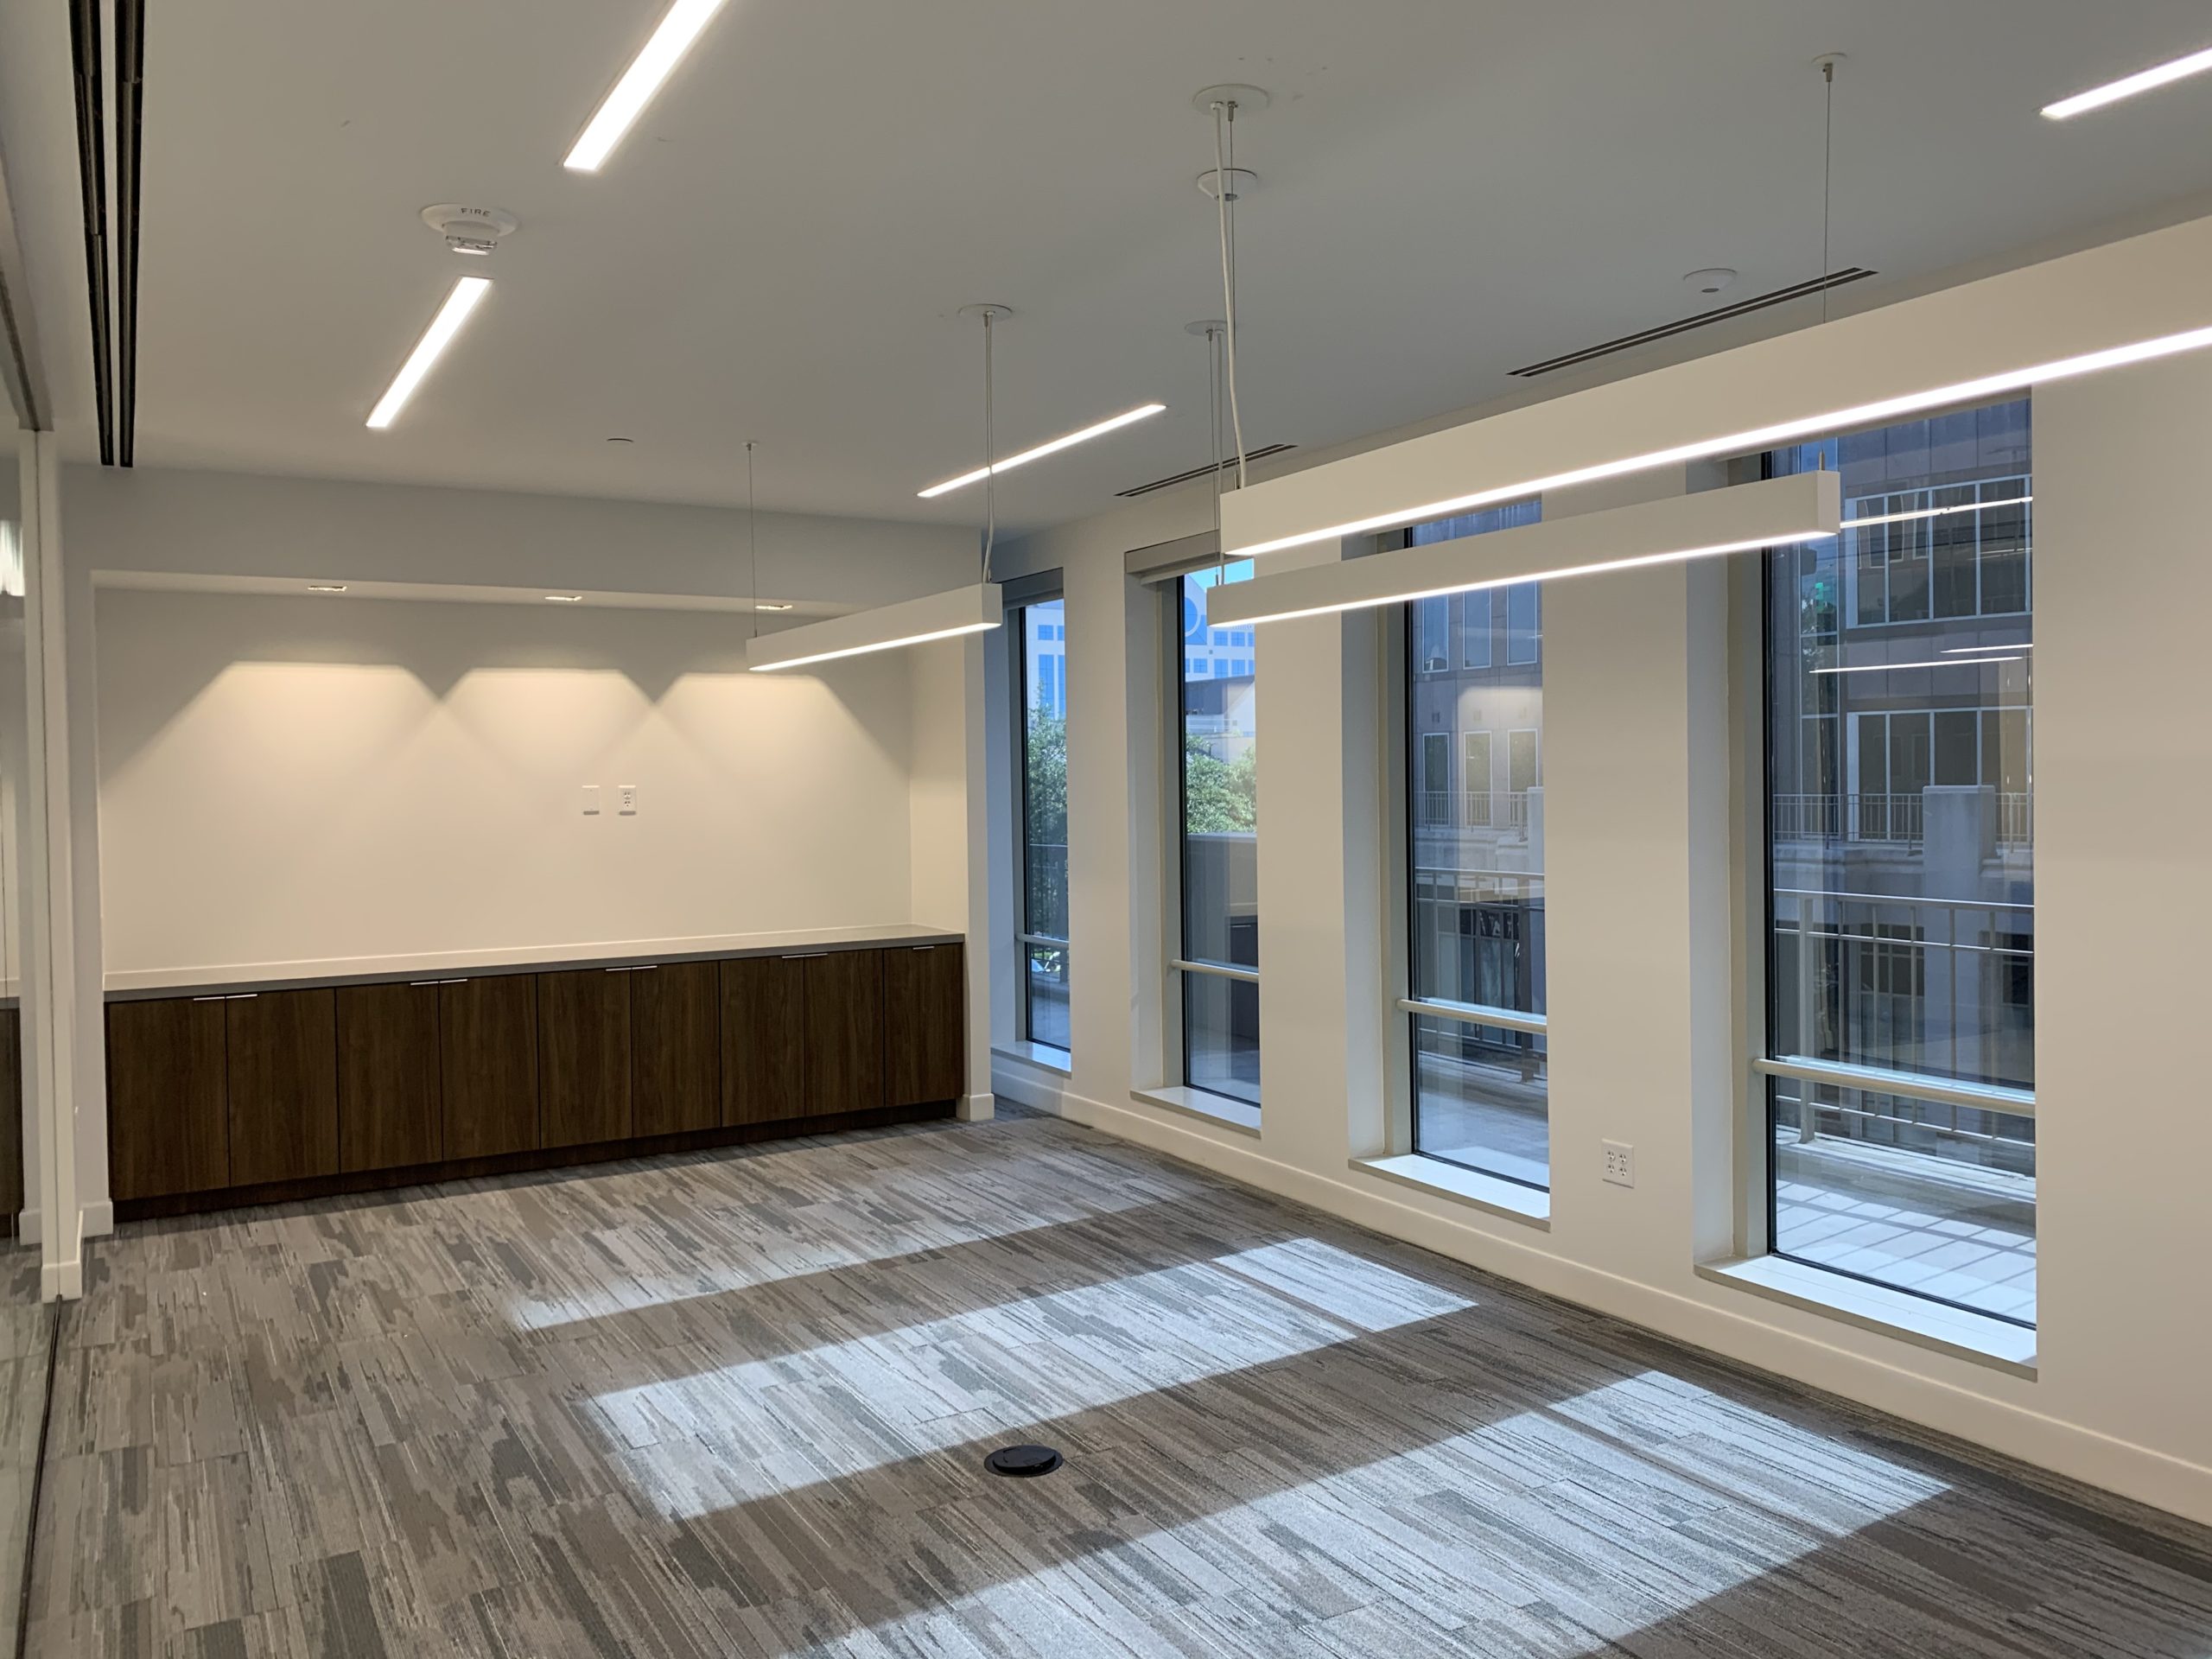 Preston Commons West – 2nd Floor Corridor, Restrooms and Spec Suites 210 Conference